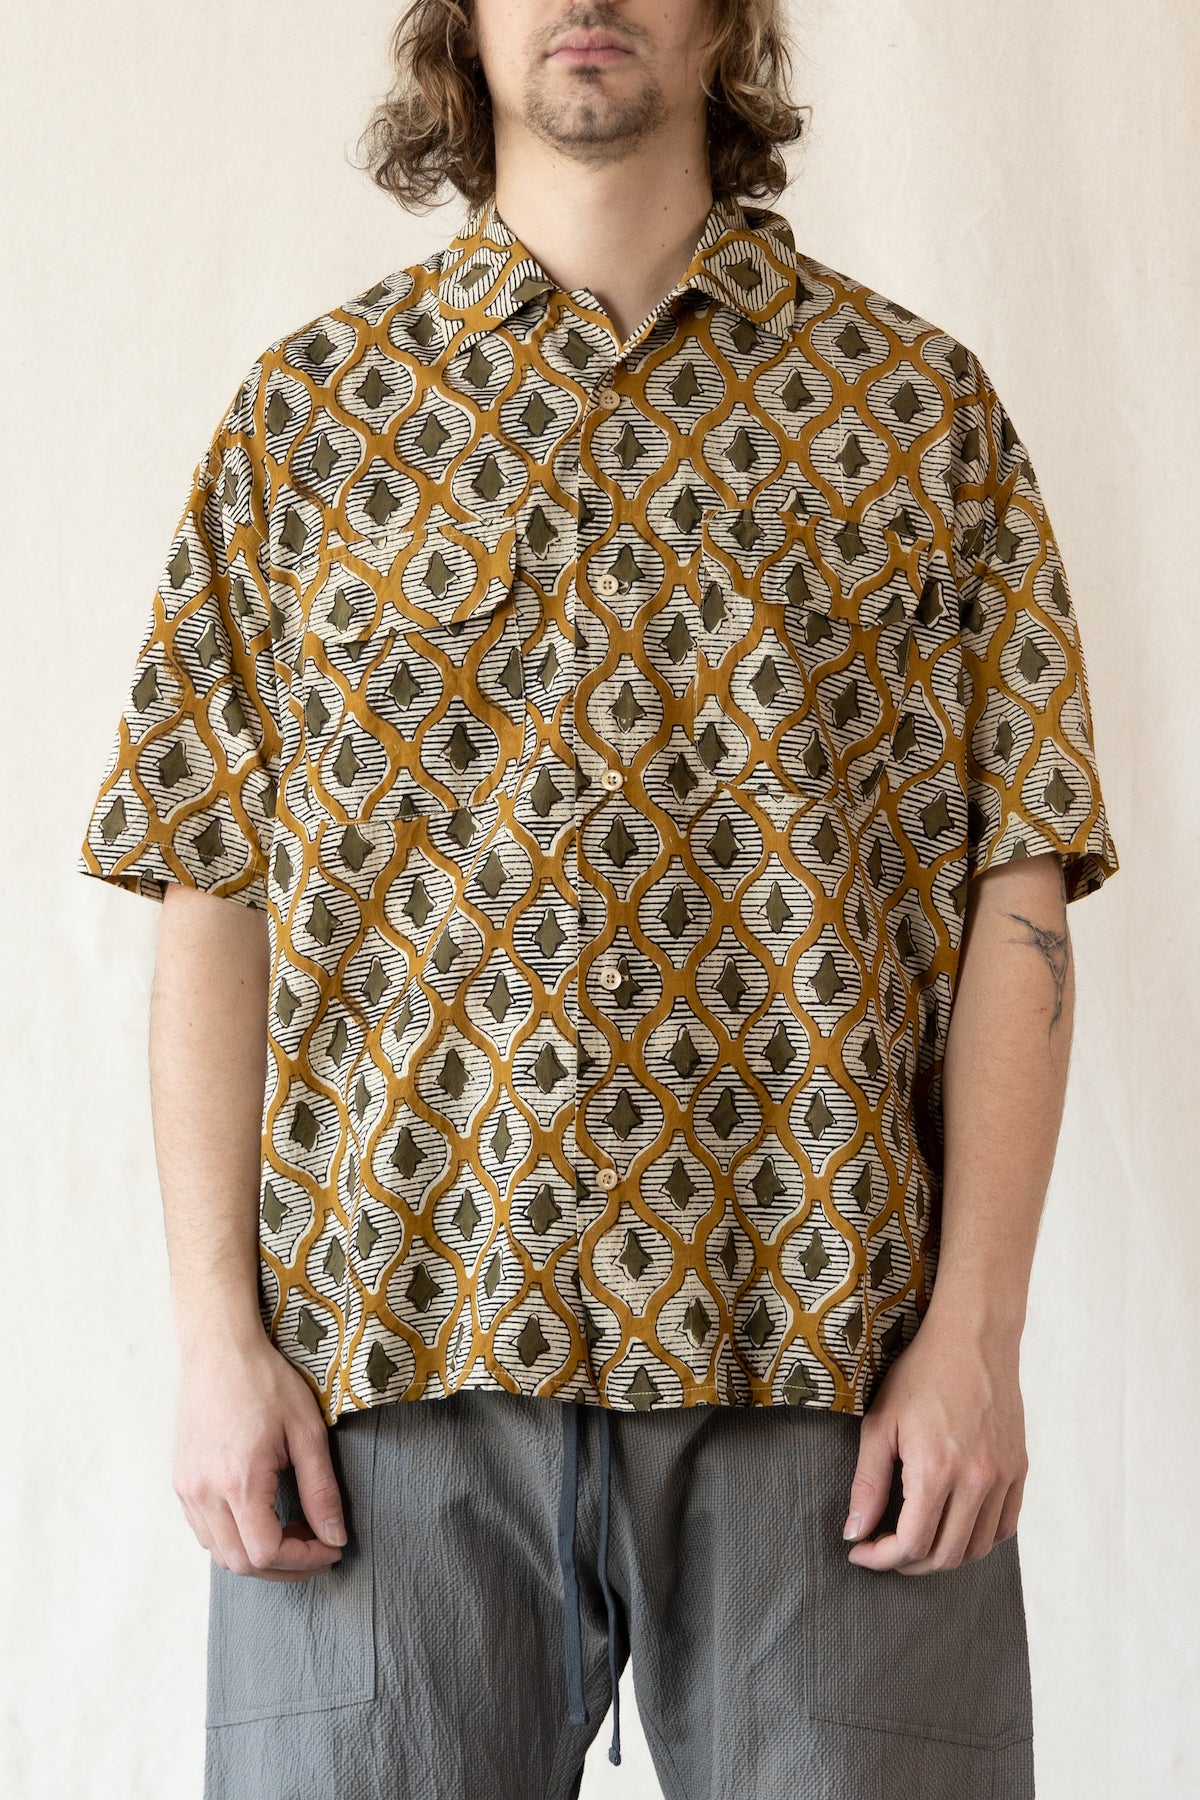 ts(s) - Ethnic Print Short Sleeve Shirt - Khaki - Canoe Club